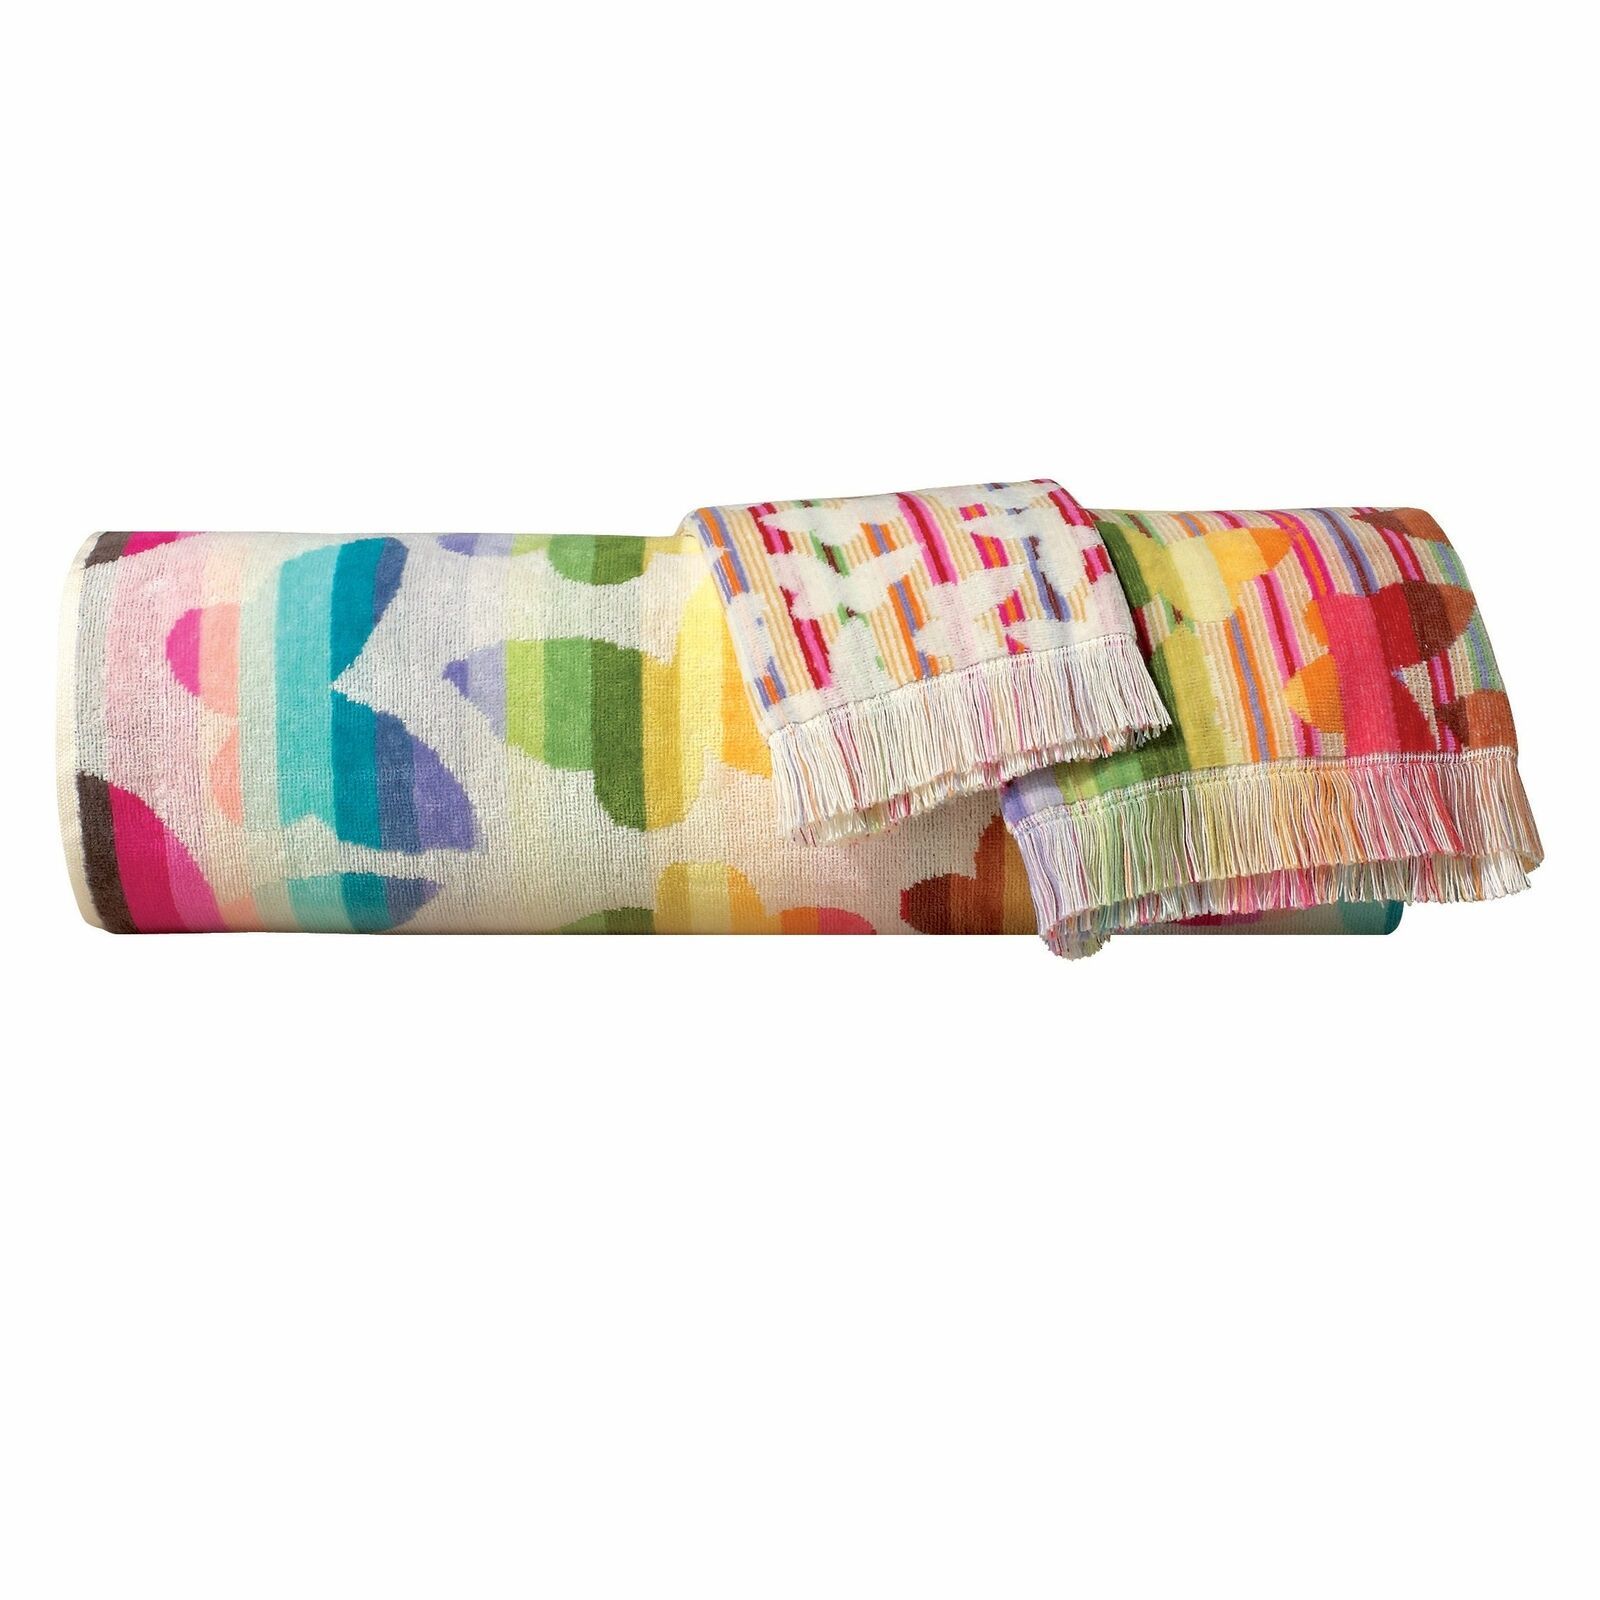 Missoni Home Josephine Bath Towel - Multi-color Butterfly Pattern - $75.00